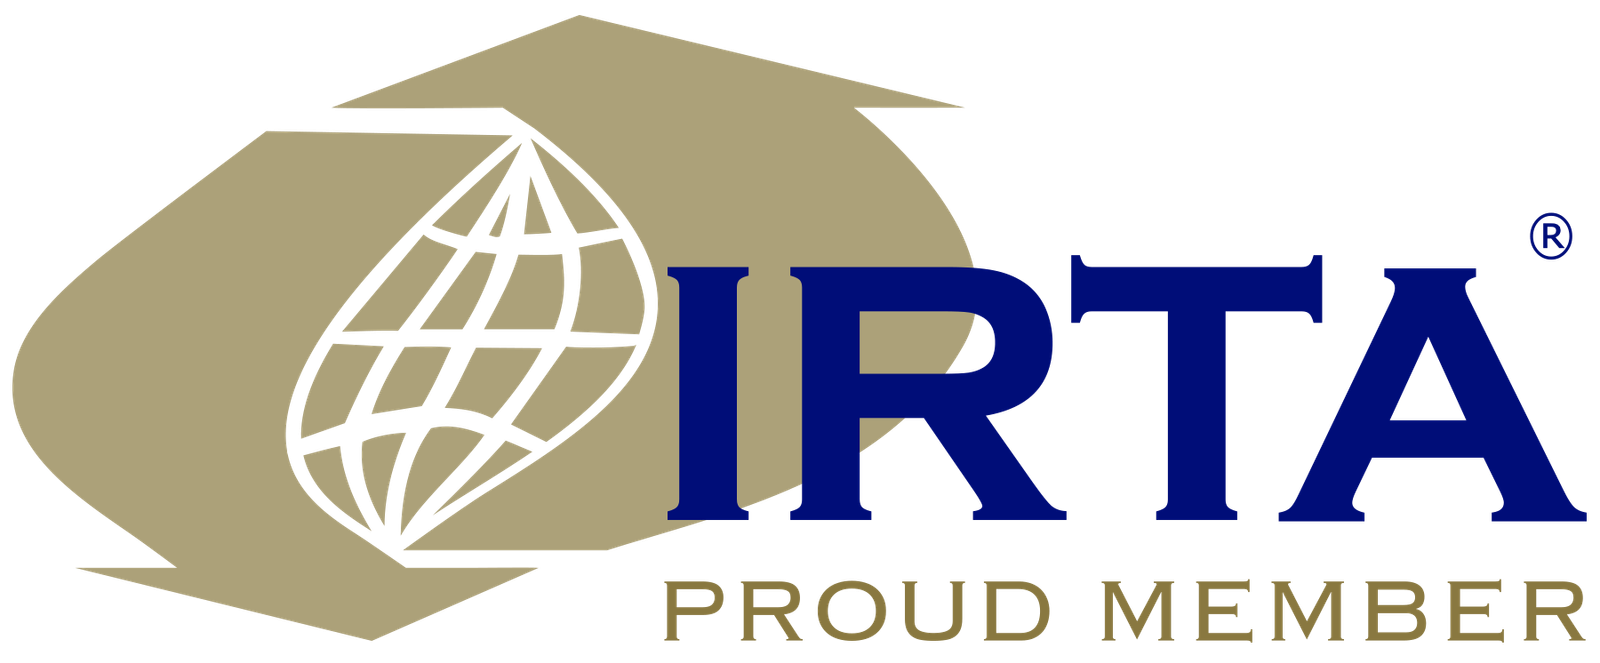 Bartercard Europe Joins IRTA